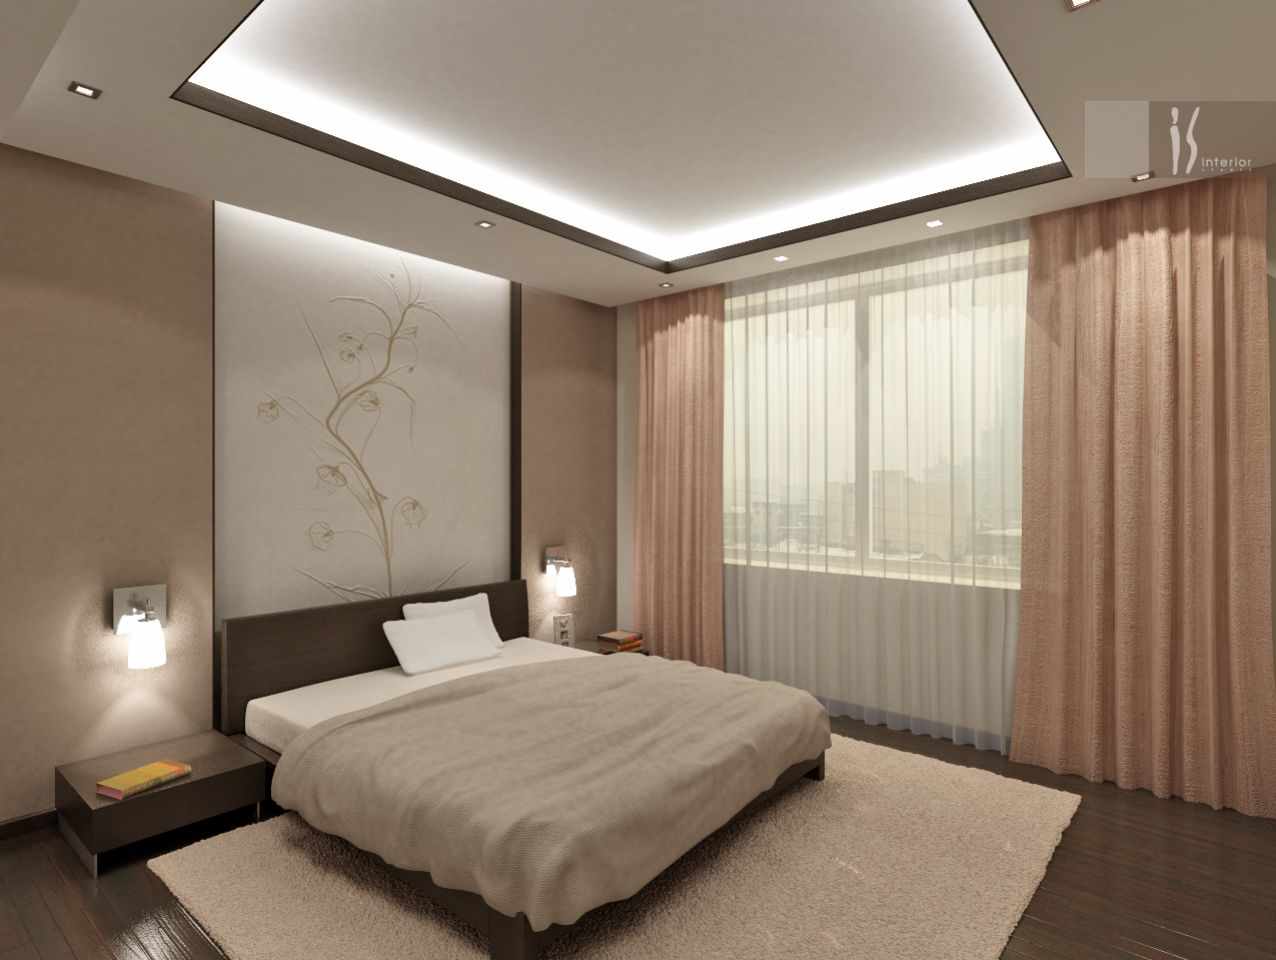 Пример за красив дизайн в стил спалня